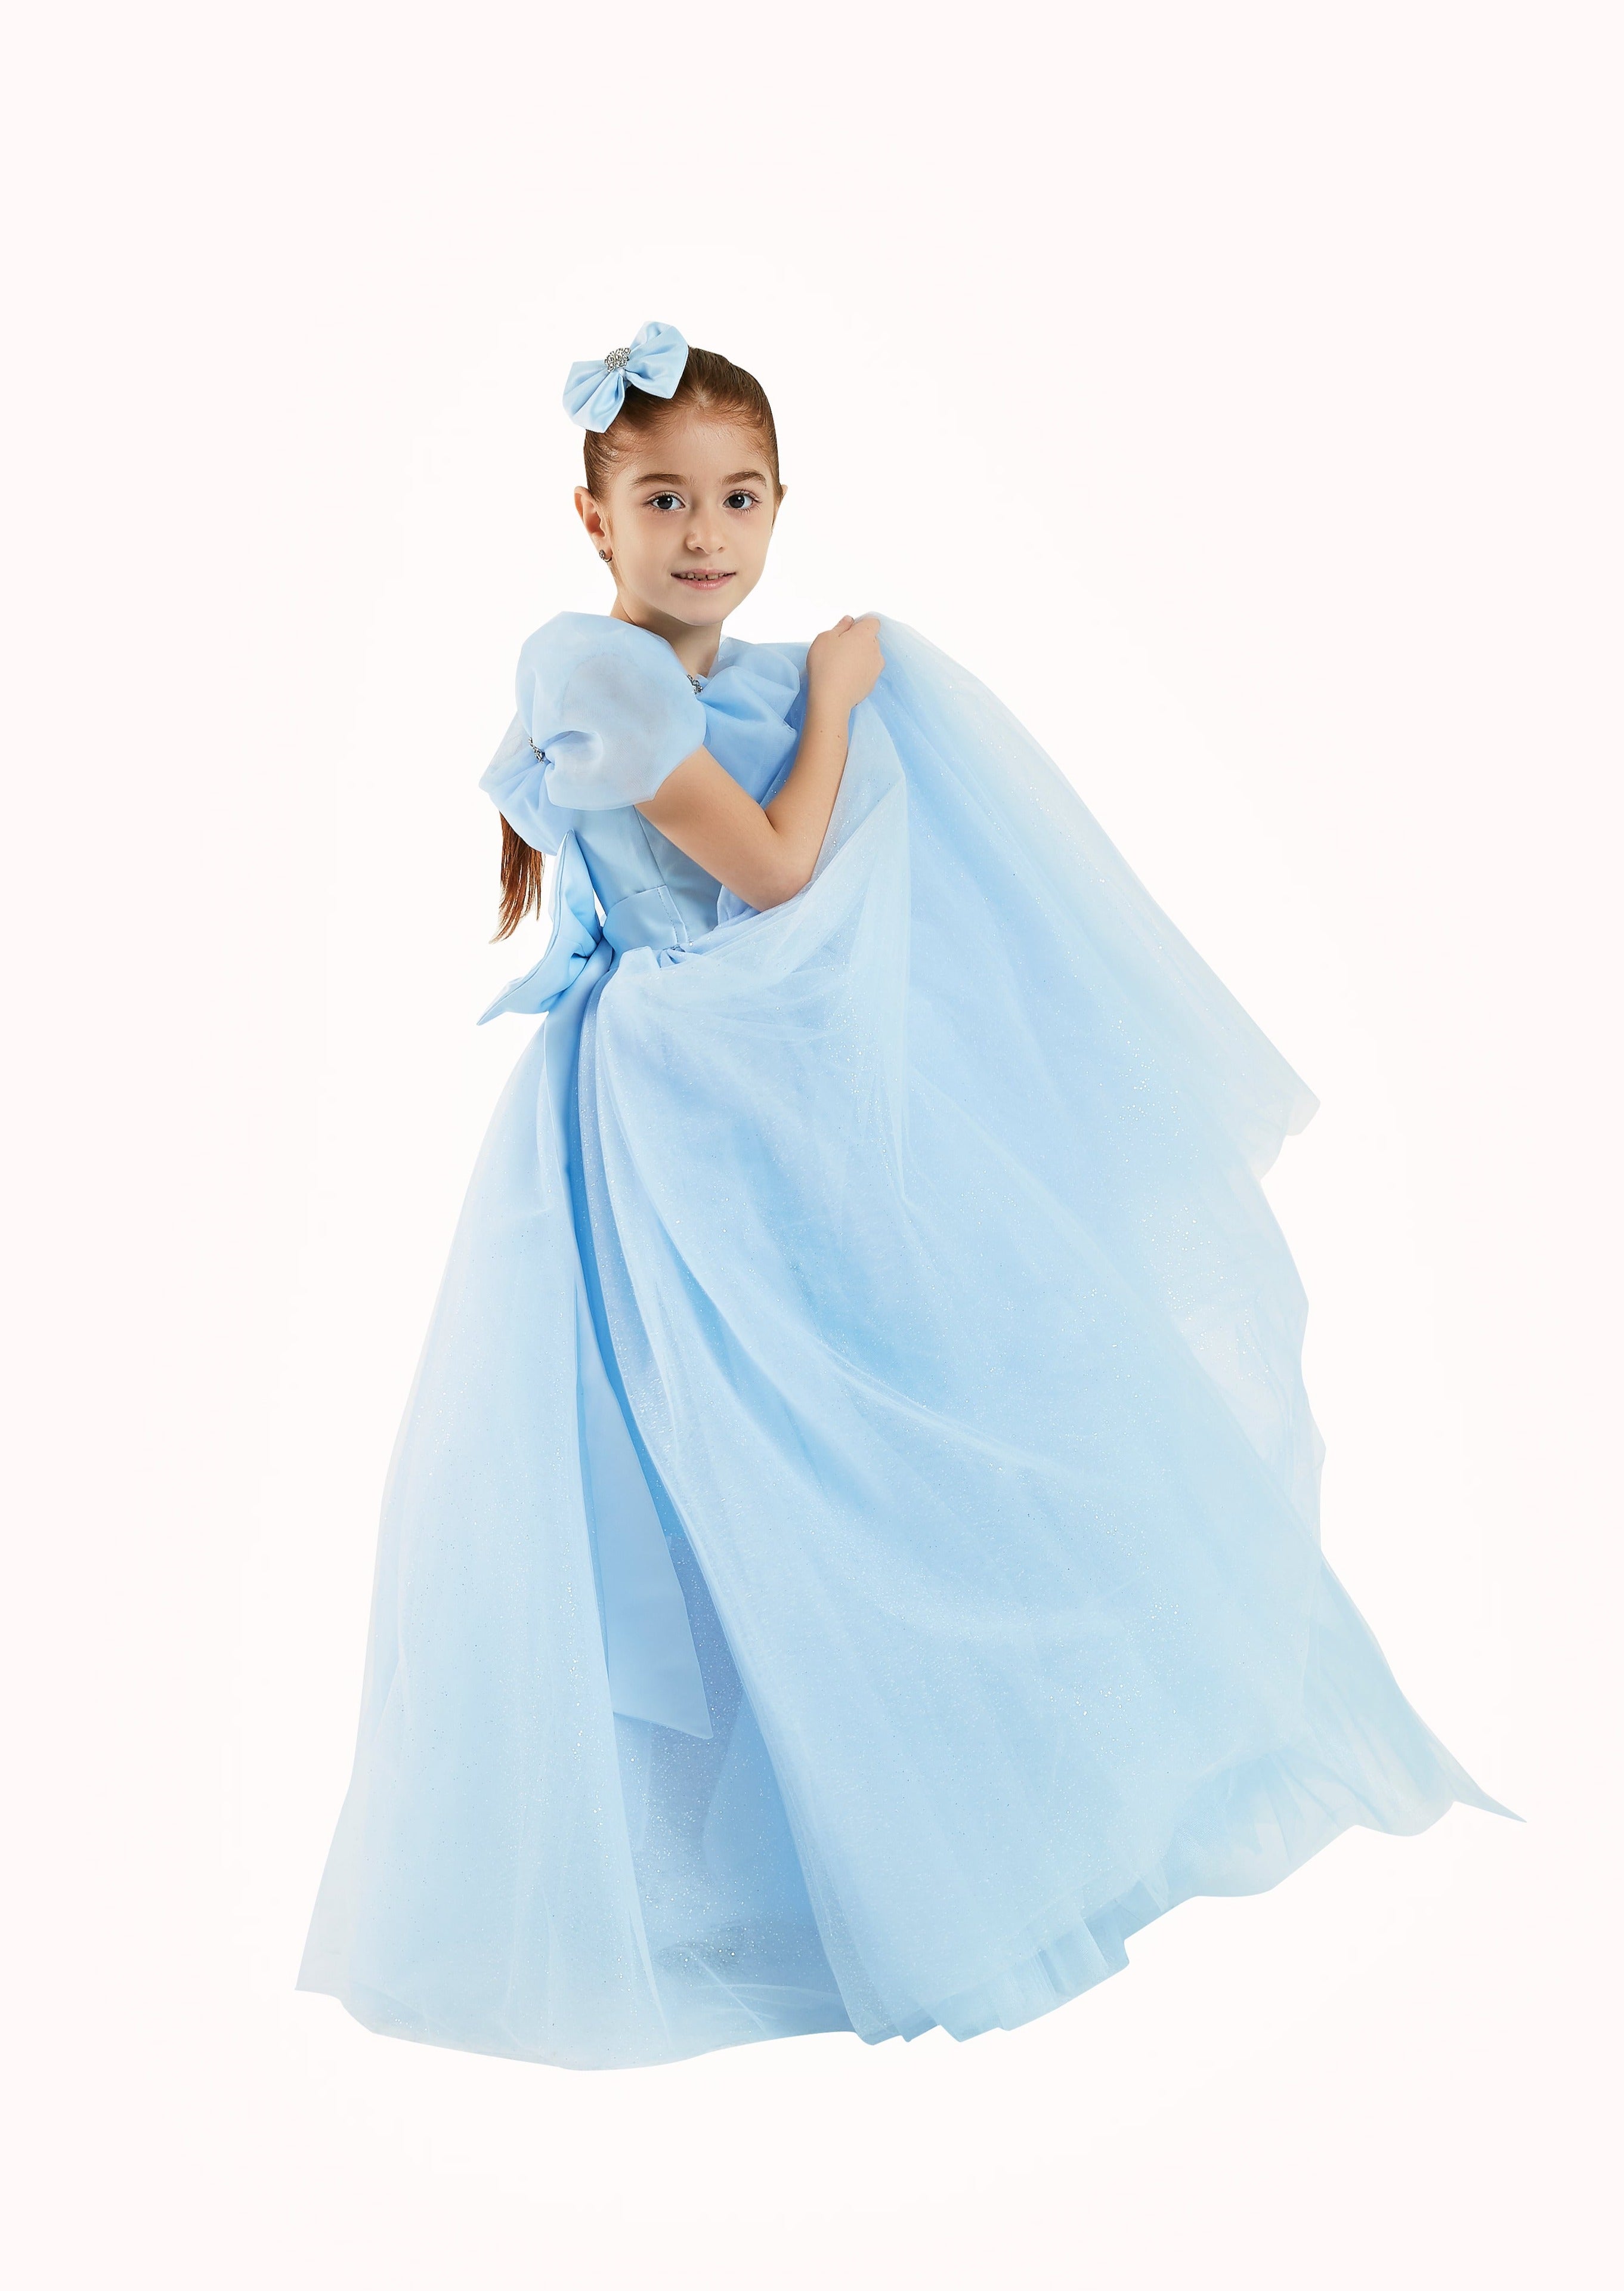 Cinderella inspired dress